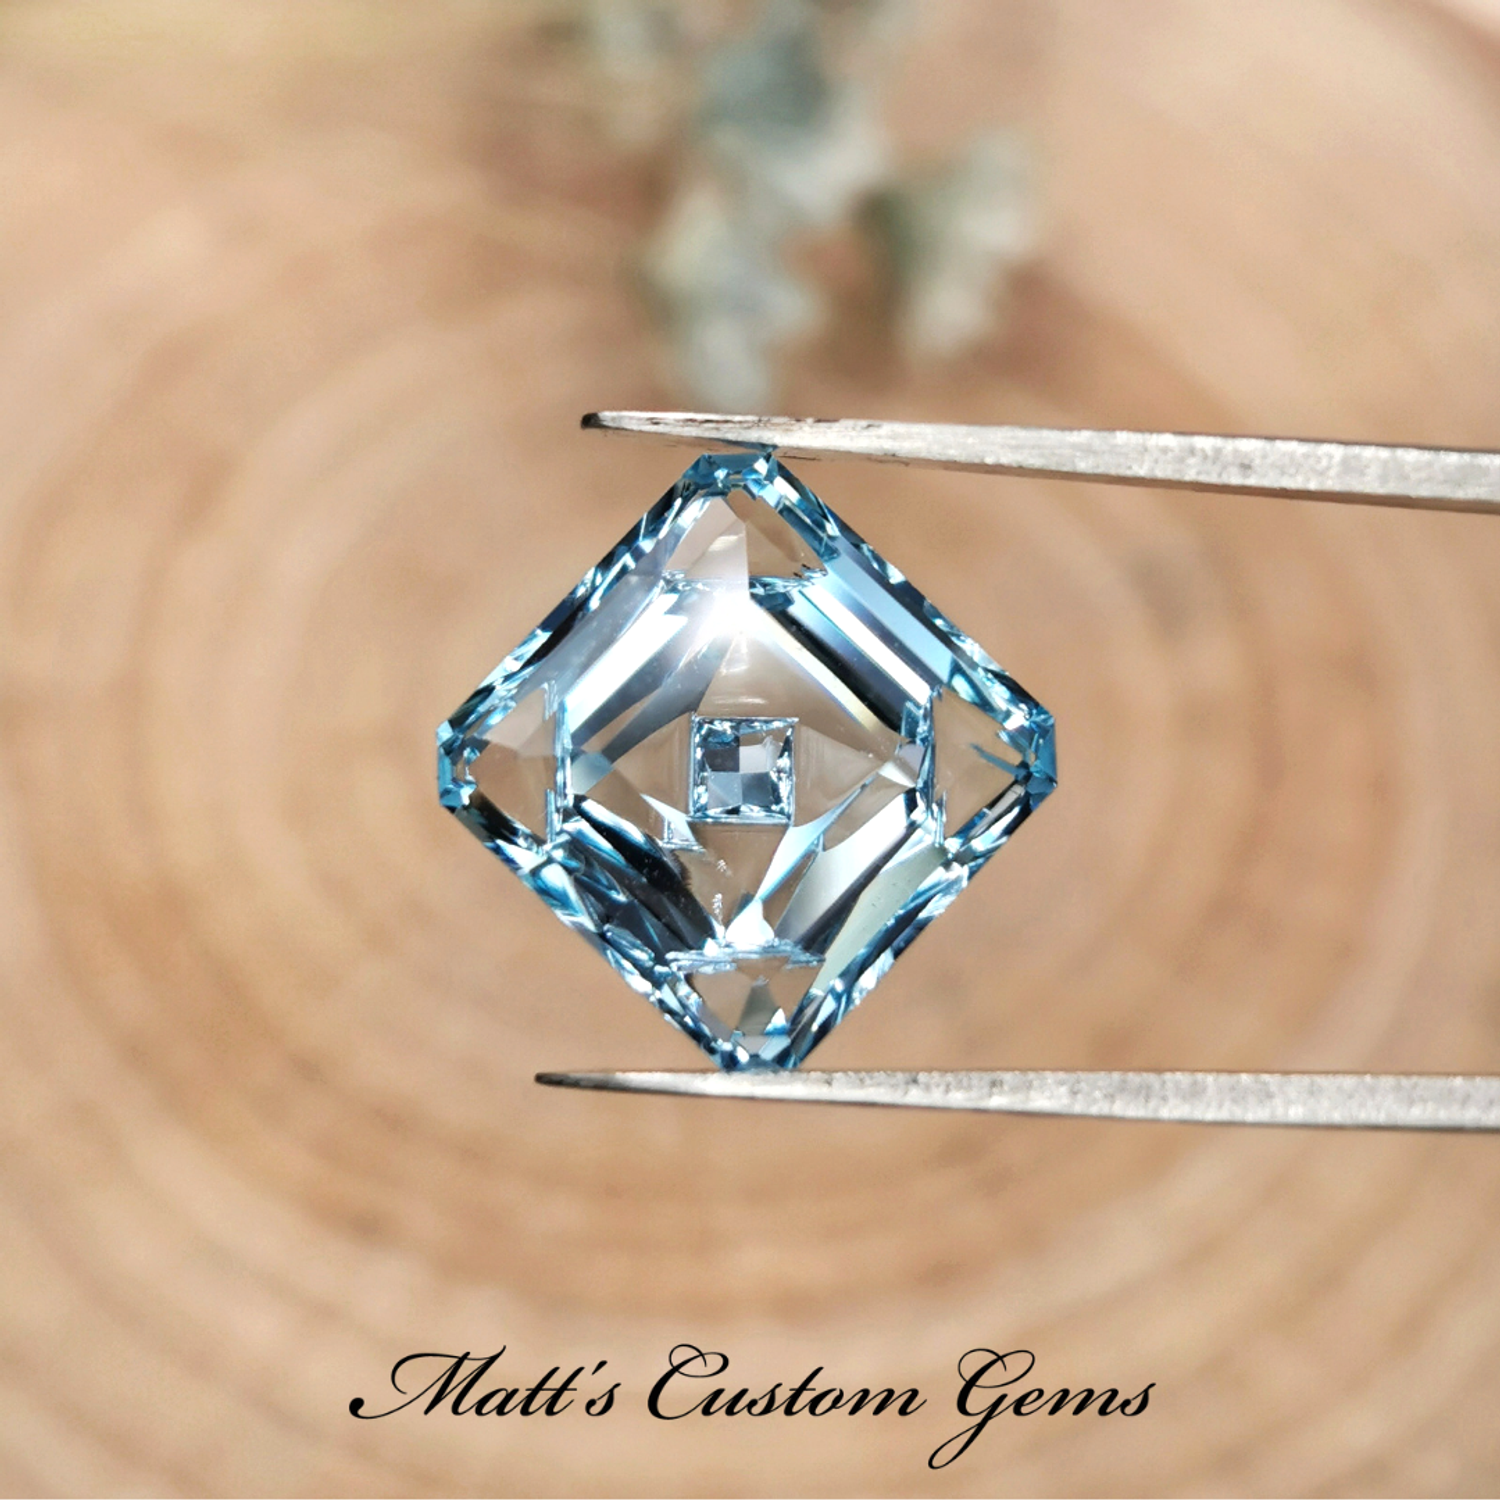 Matt's Custom Gems | PERFORMANCE